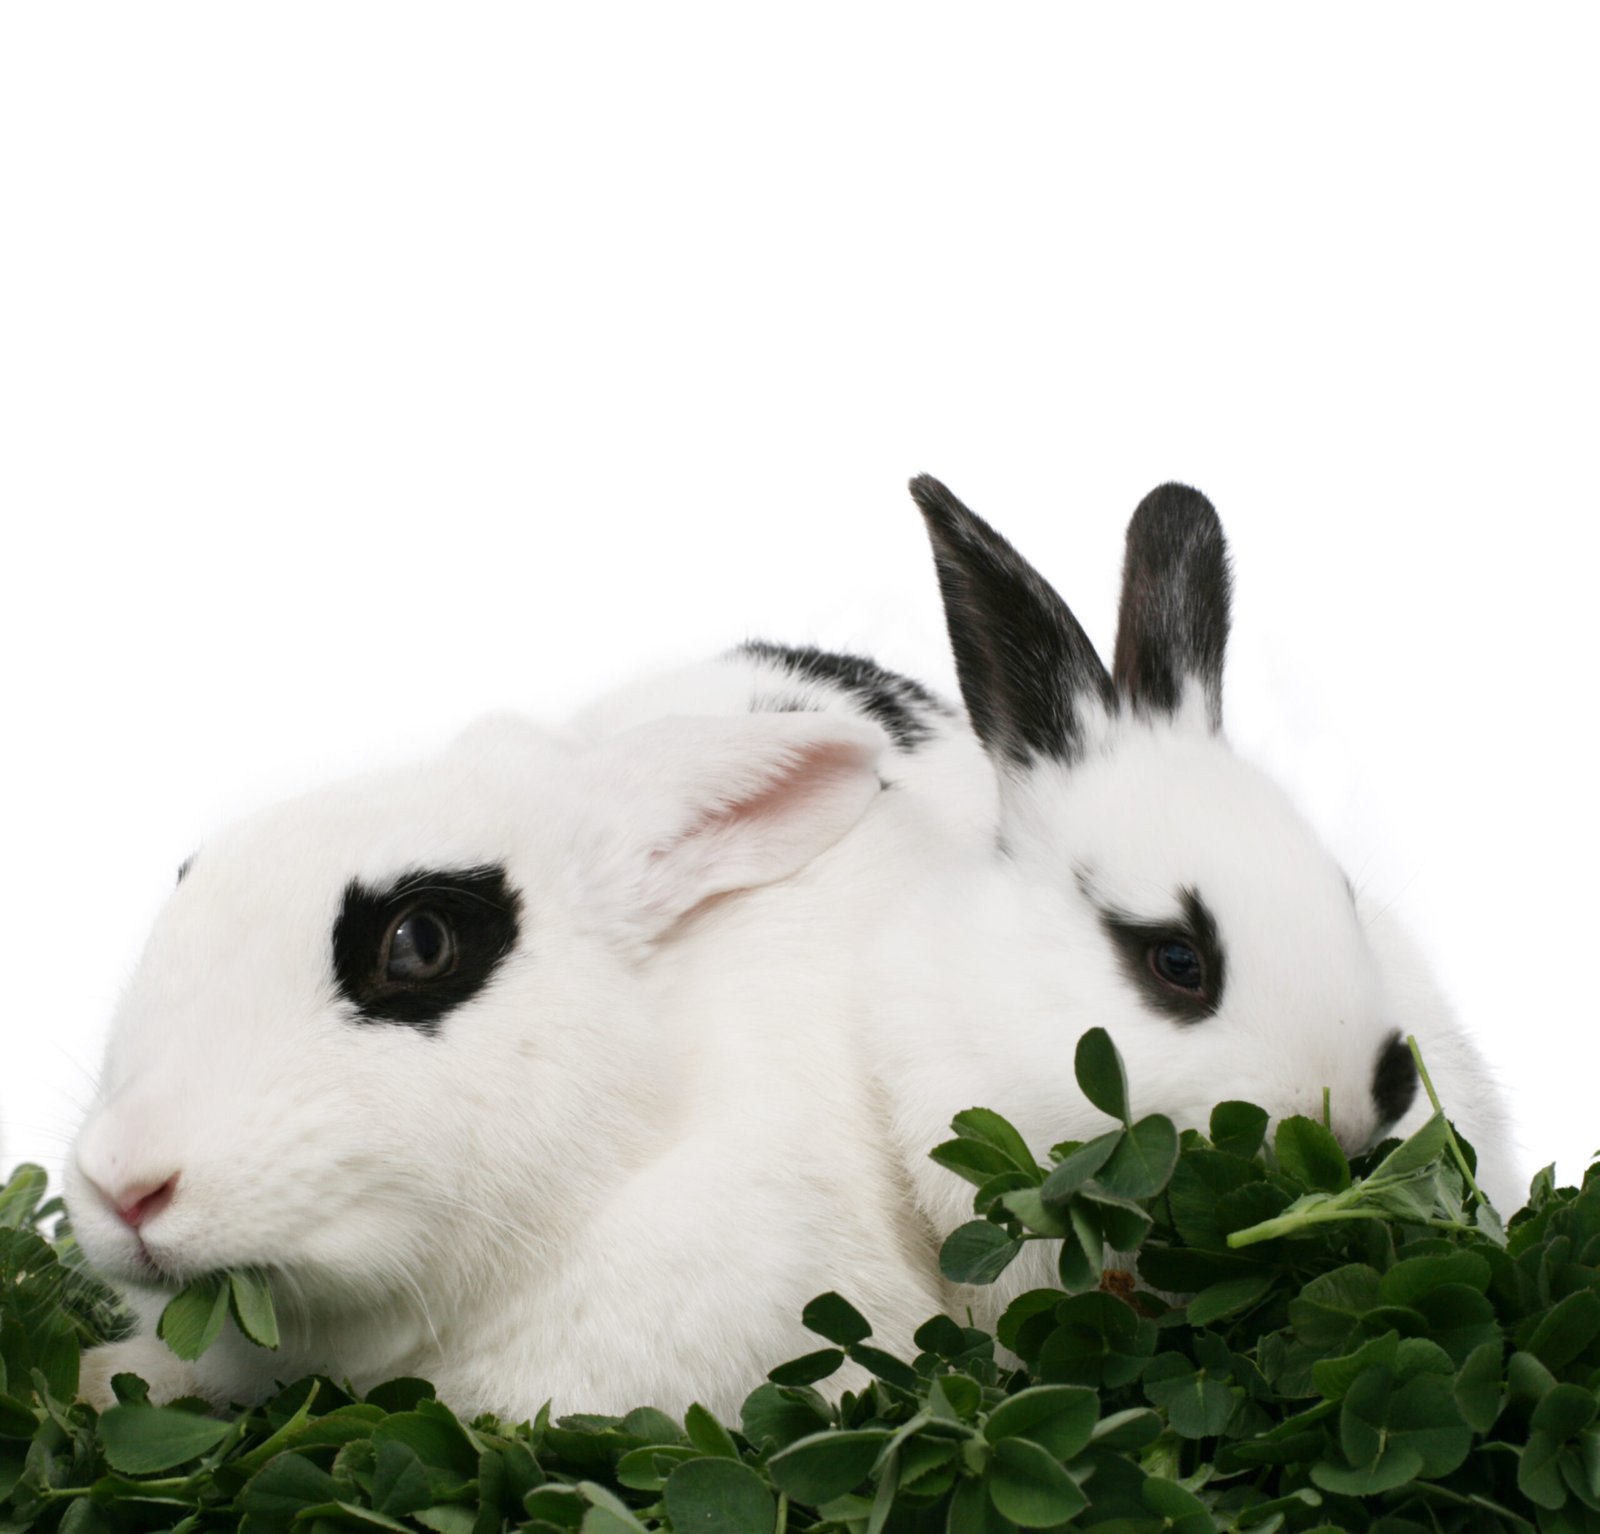 Microgreens for rabbits